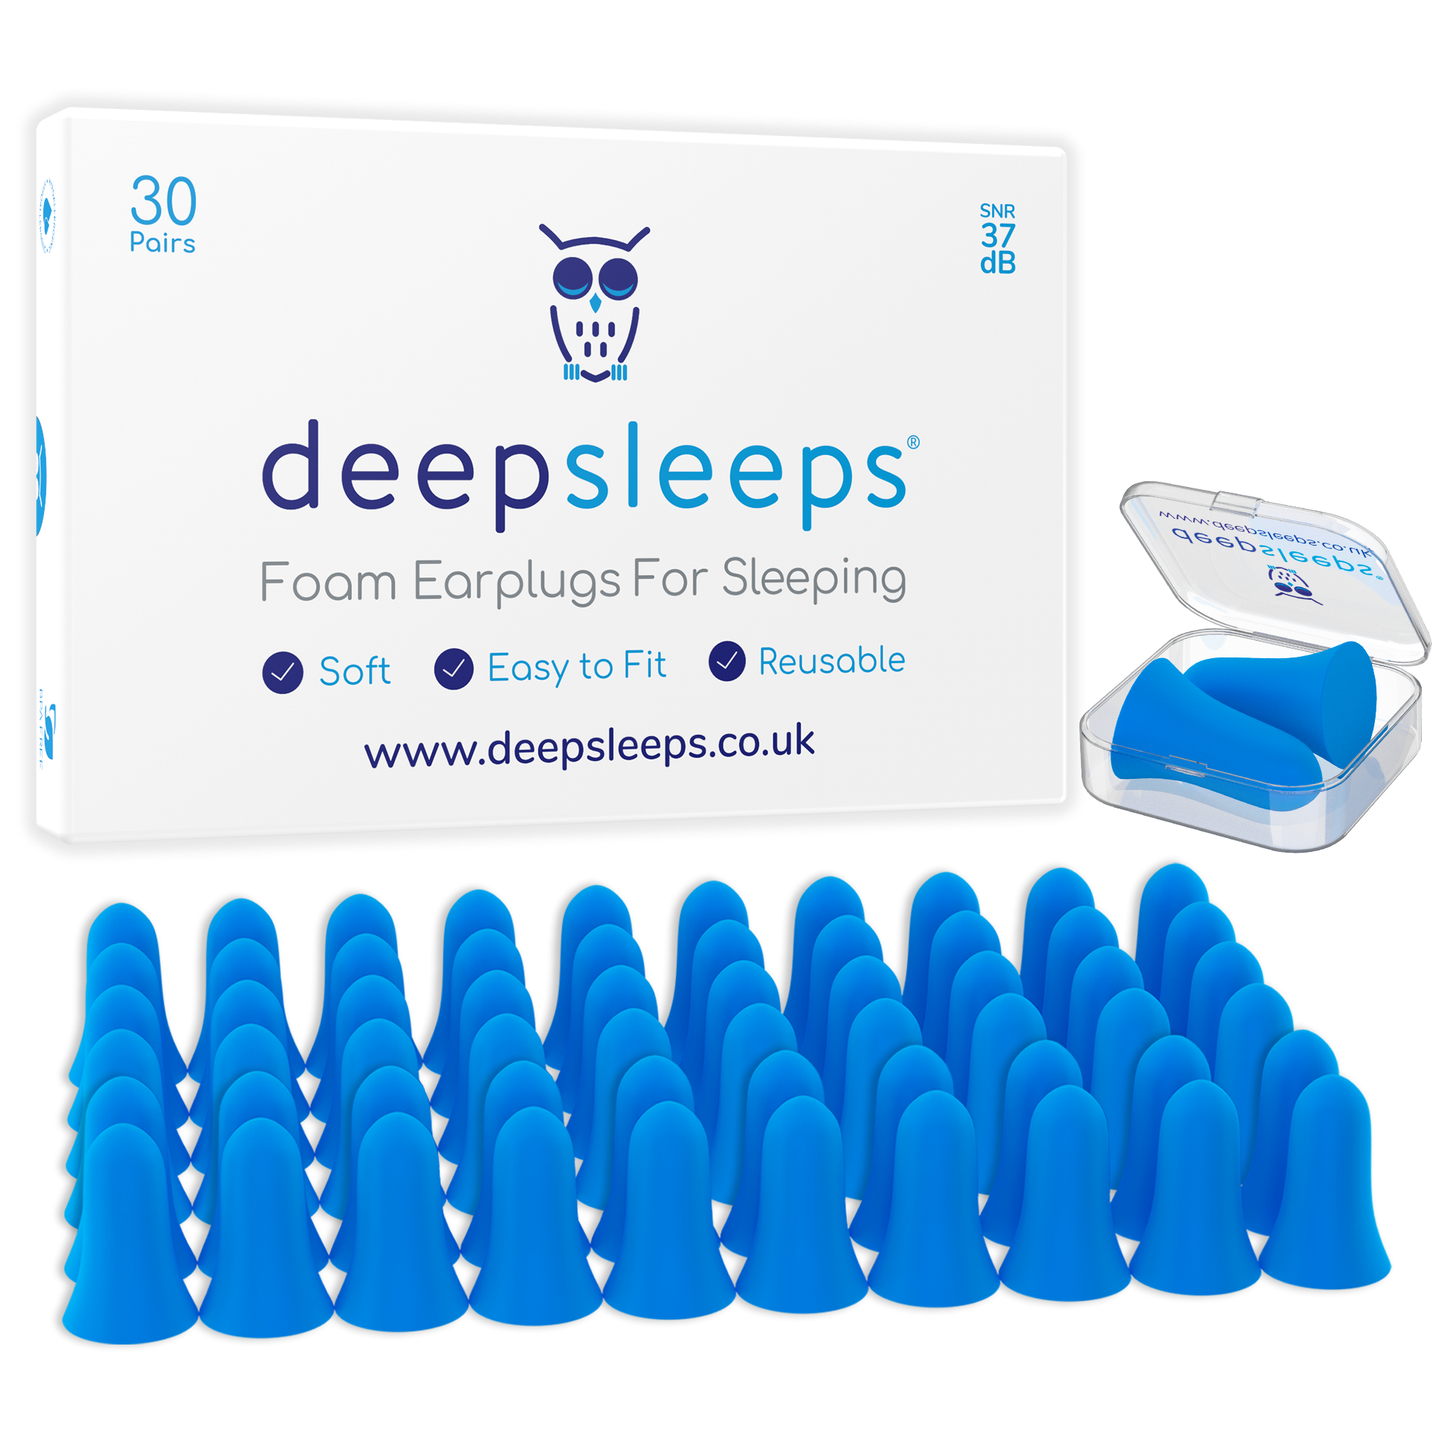 Deep Sleeps Foam Earplugs For Sleeping 37dB (30 Pairs) - Deep Sleeps